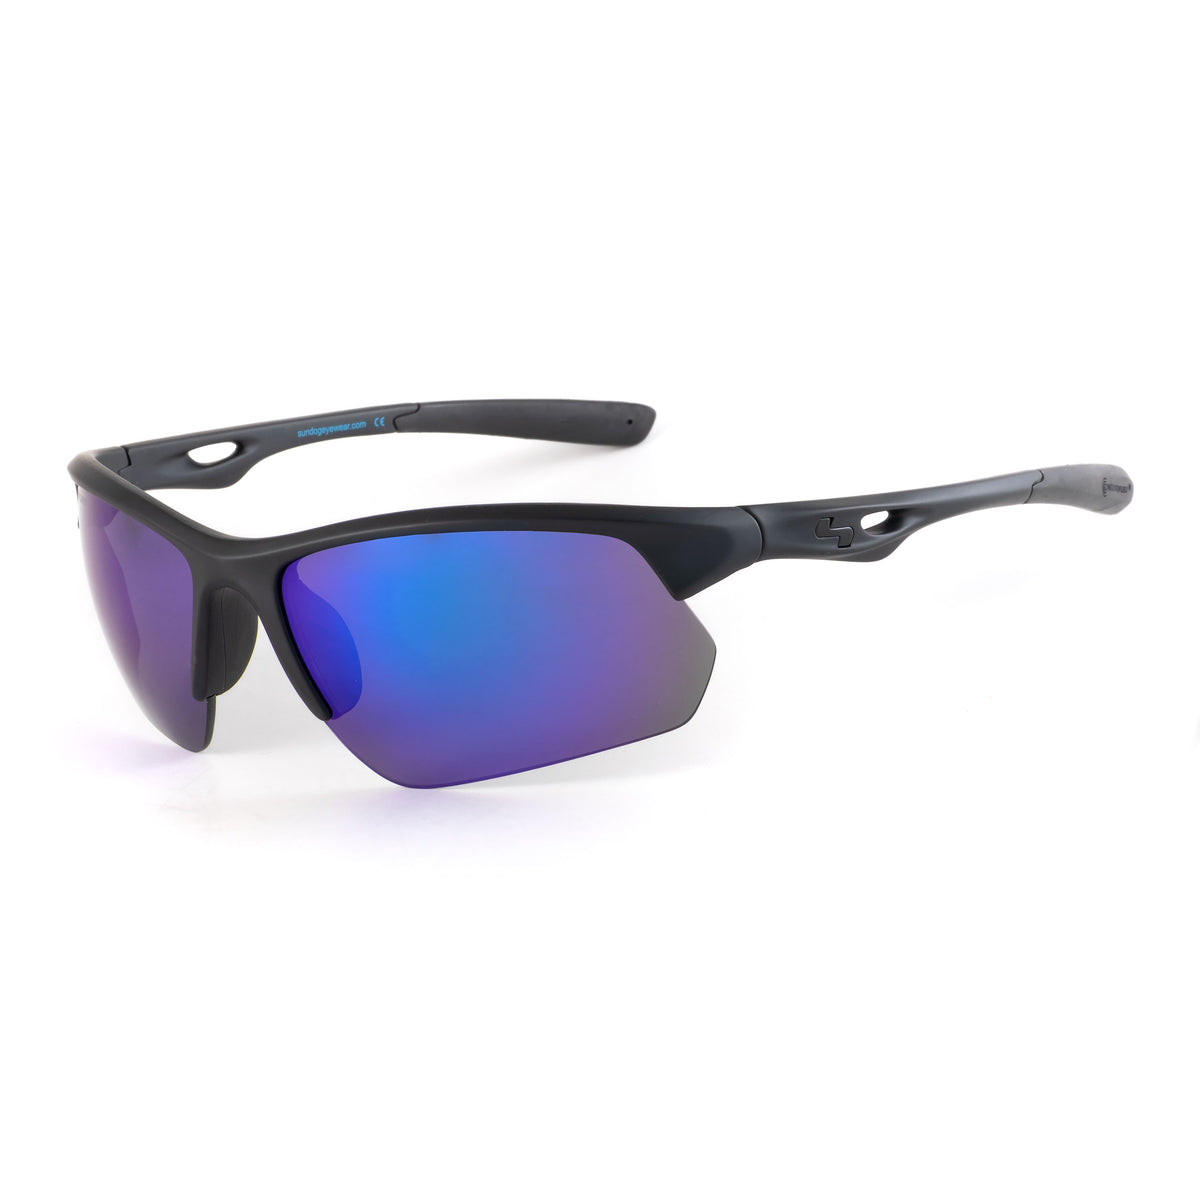 Rafflesia Arnoldi overdrive Maiden Sundog Golf Sunglasses Designed For Clearer Vision And Maximum Comfort